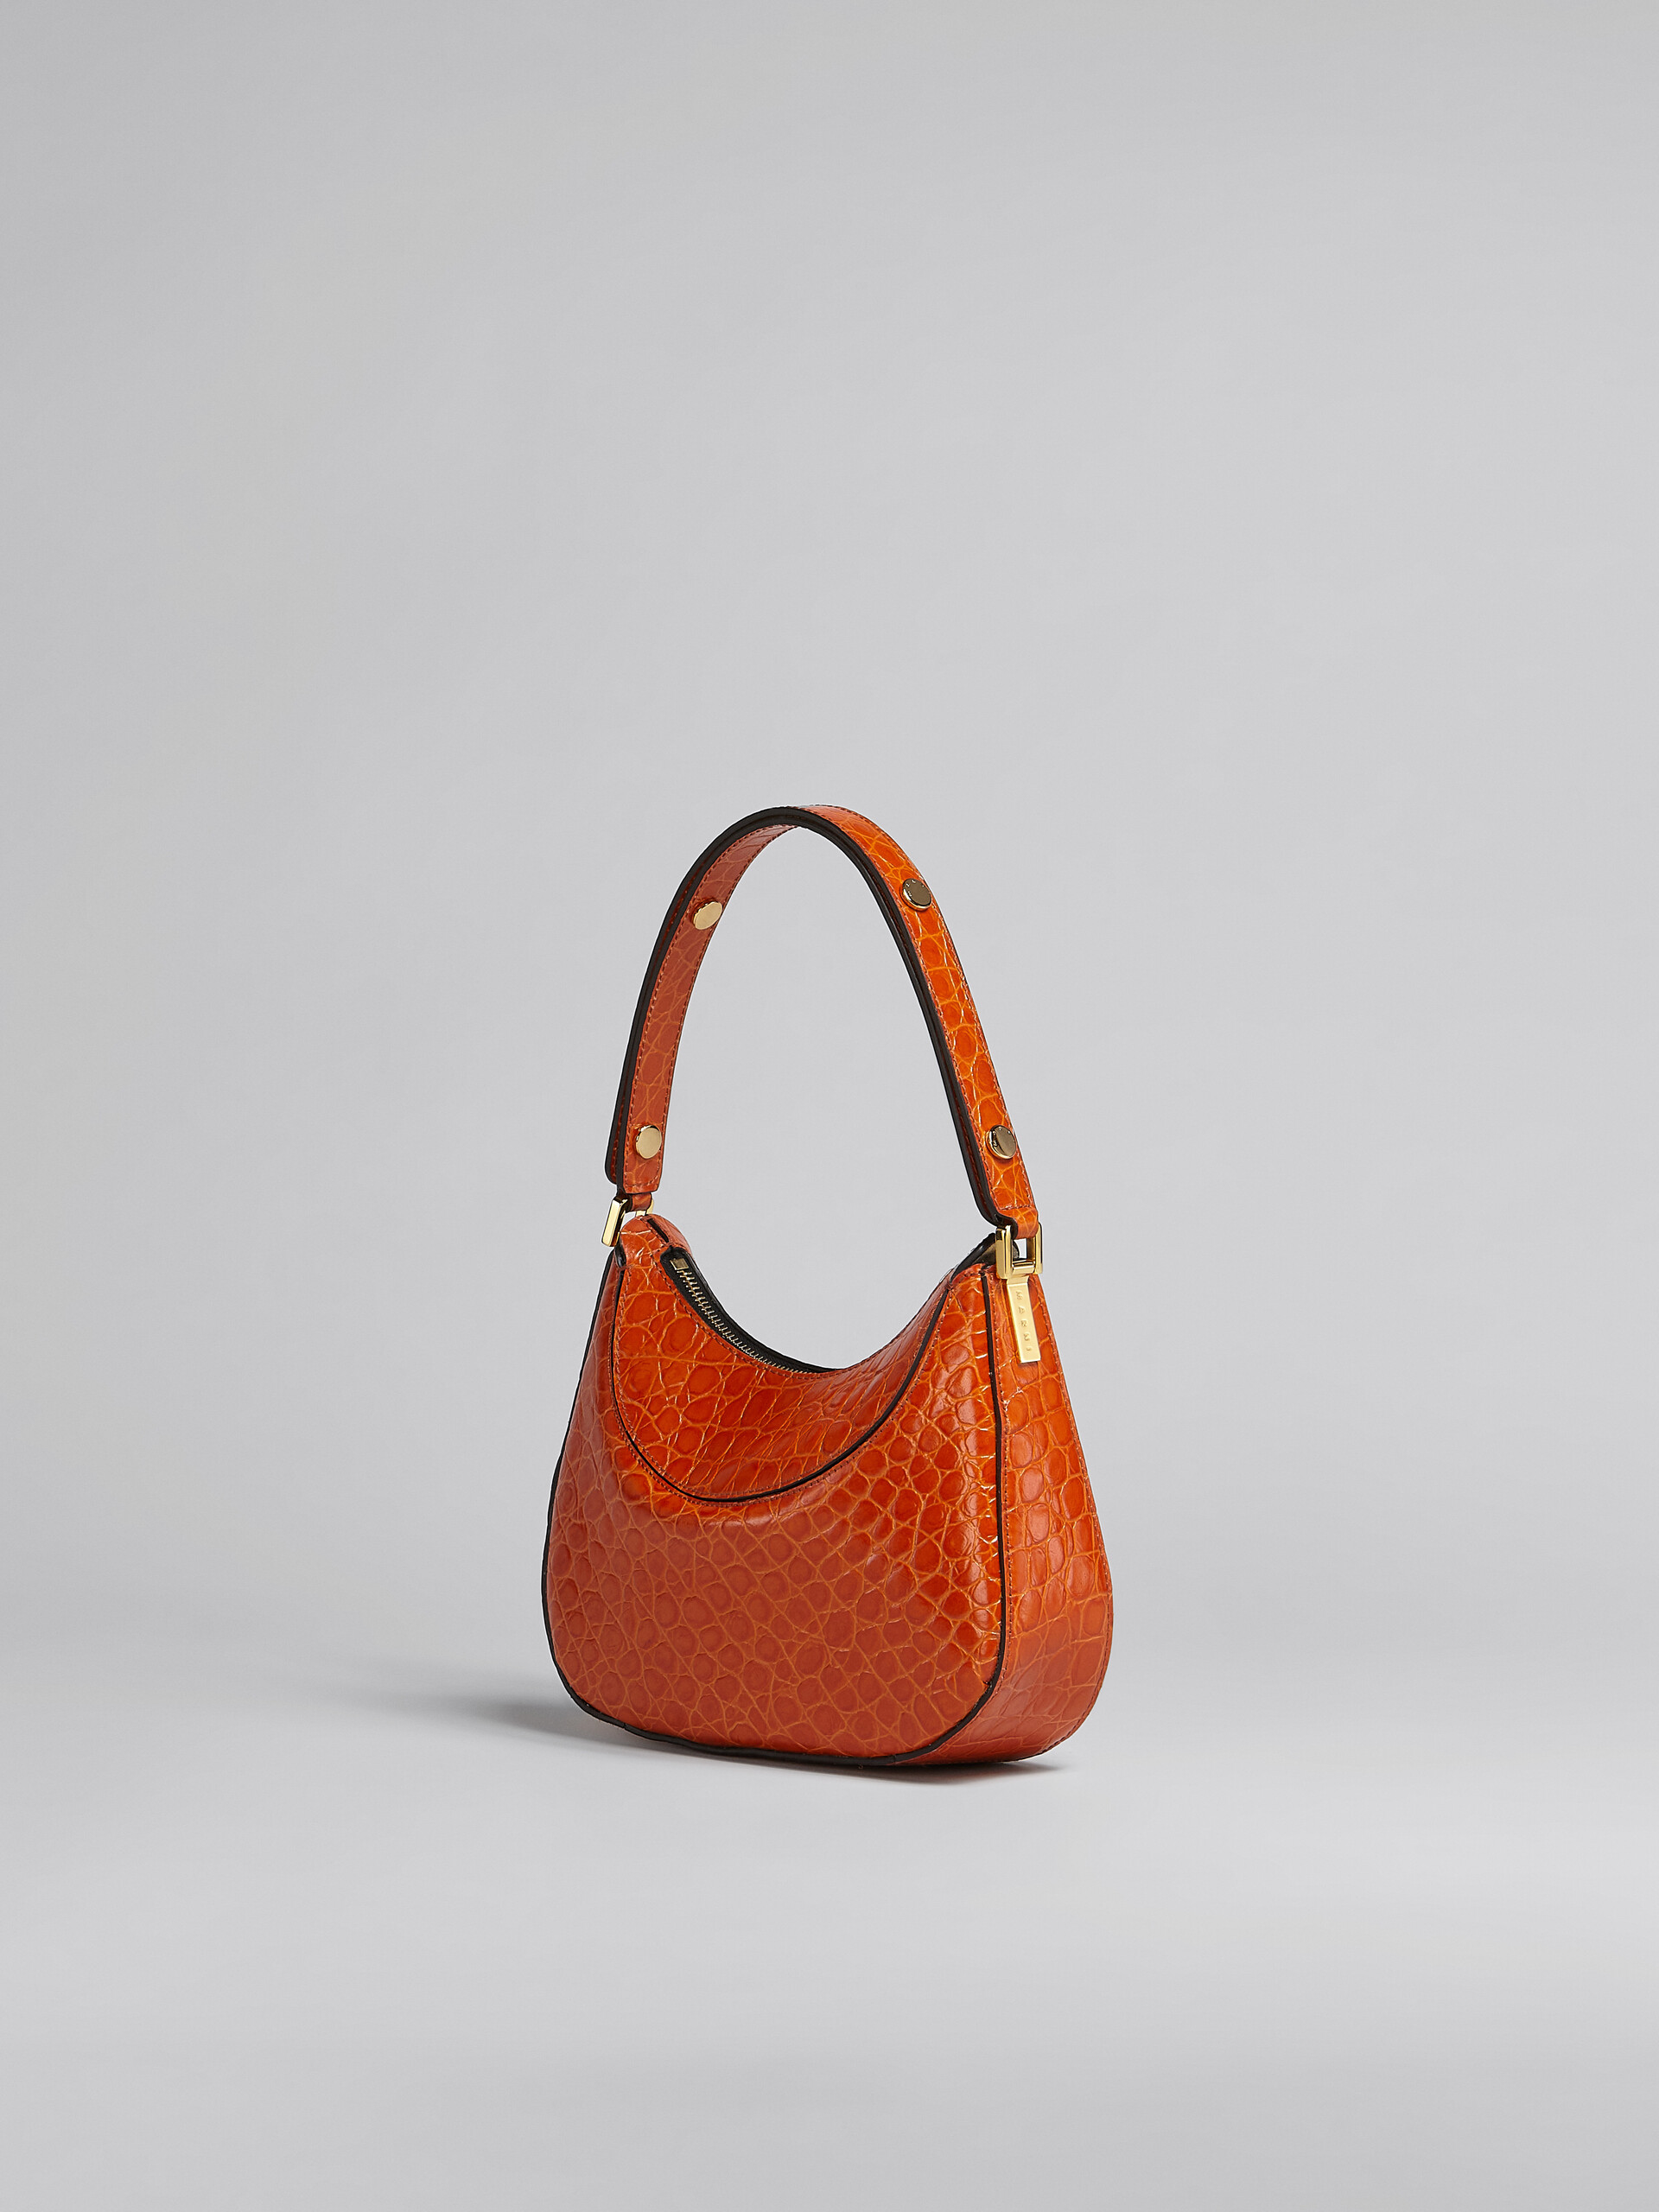 Milano Mini Bag in orange croco print leather - Handbags - Image 3